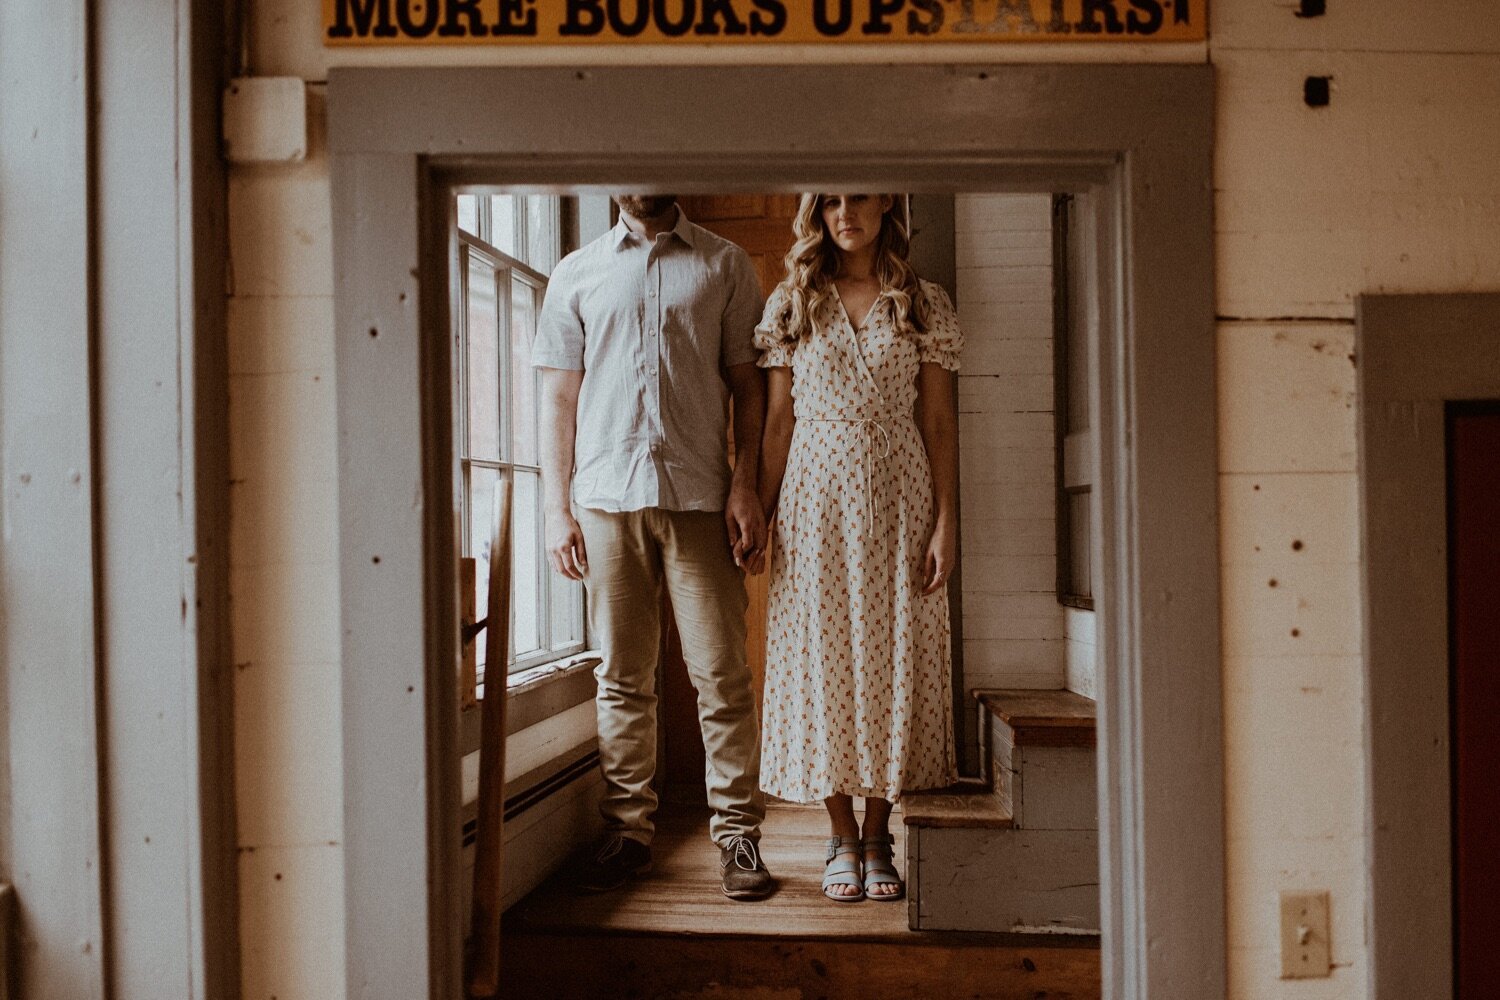 53-montague-ma-romantic-book-vinyl-store-engagement-session-boston-photographer.jpg